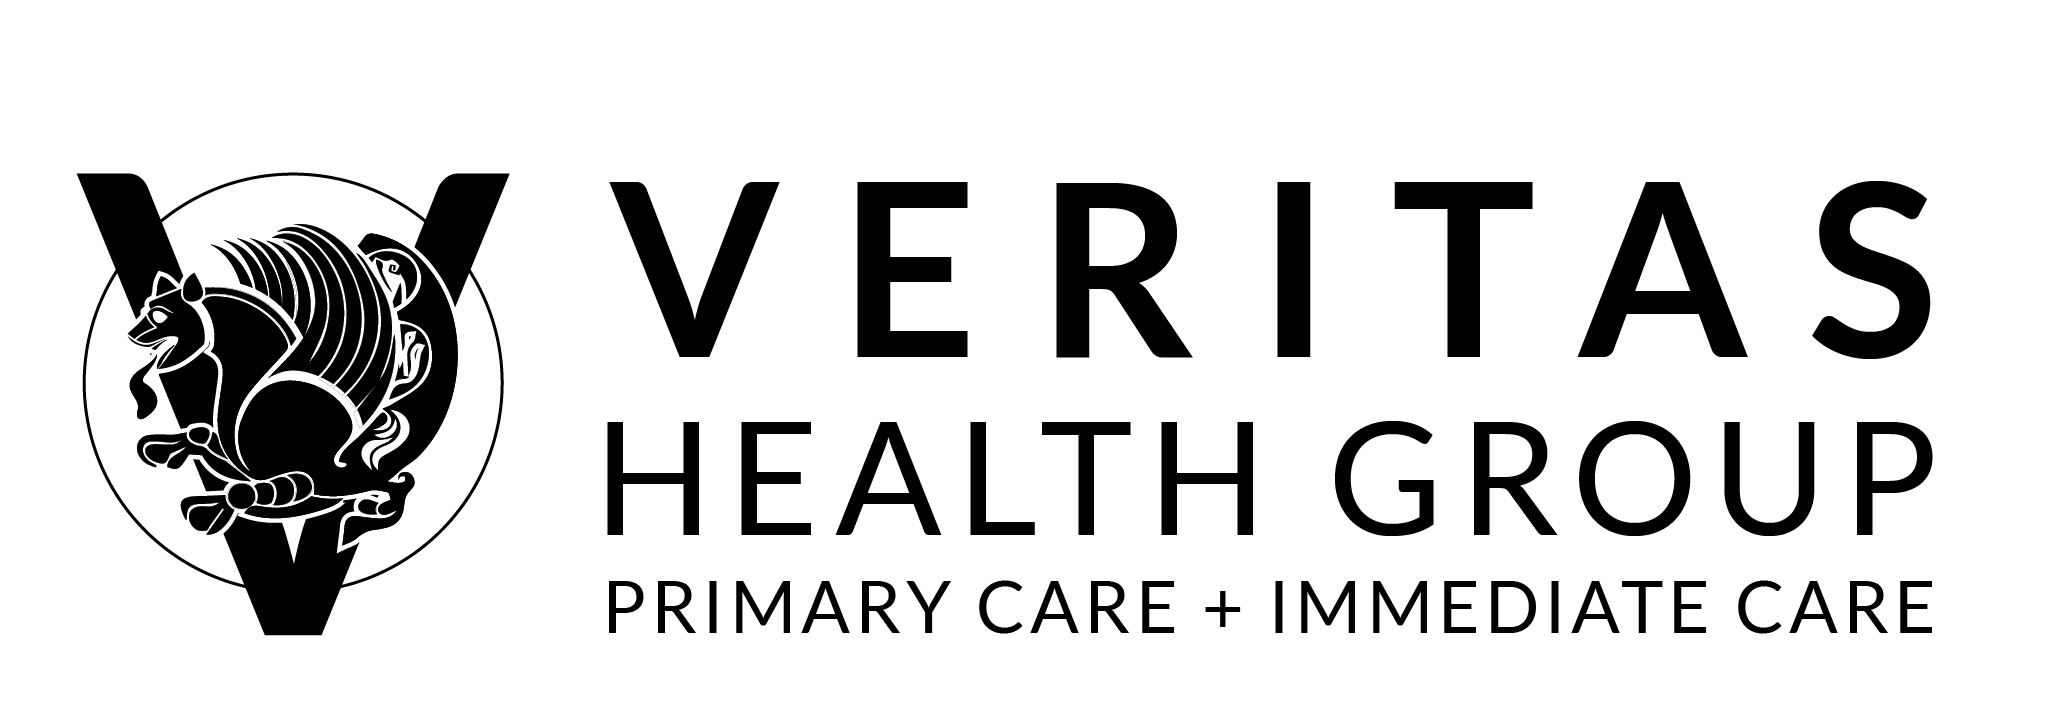 Veritas Health Group